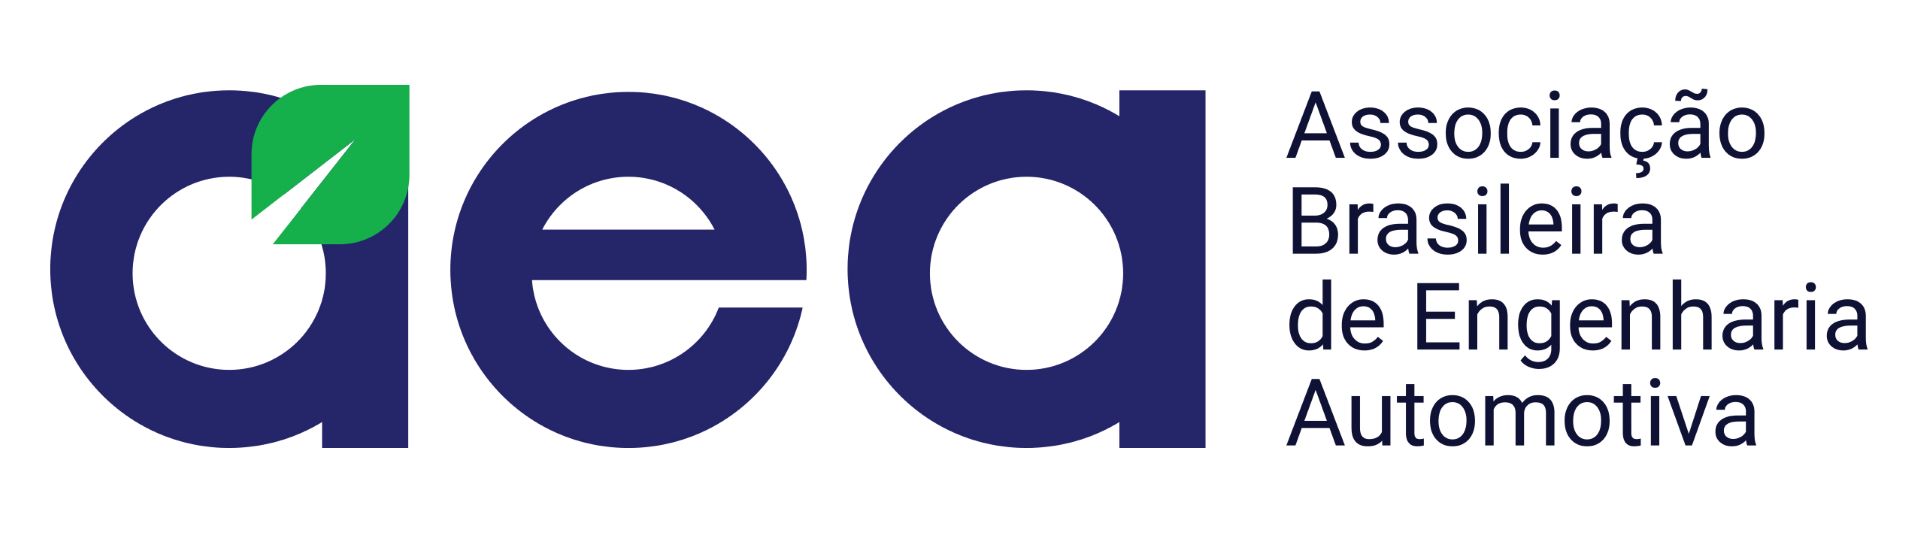 Nova logomarca resgata 40 anos de história e projeta futuro da AEA